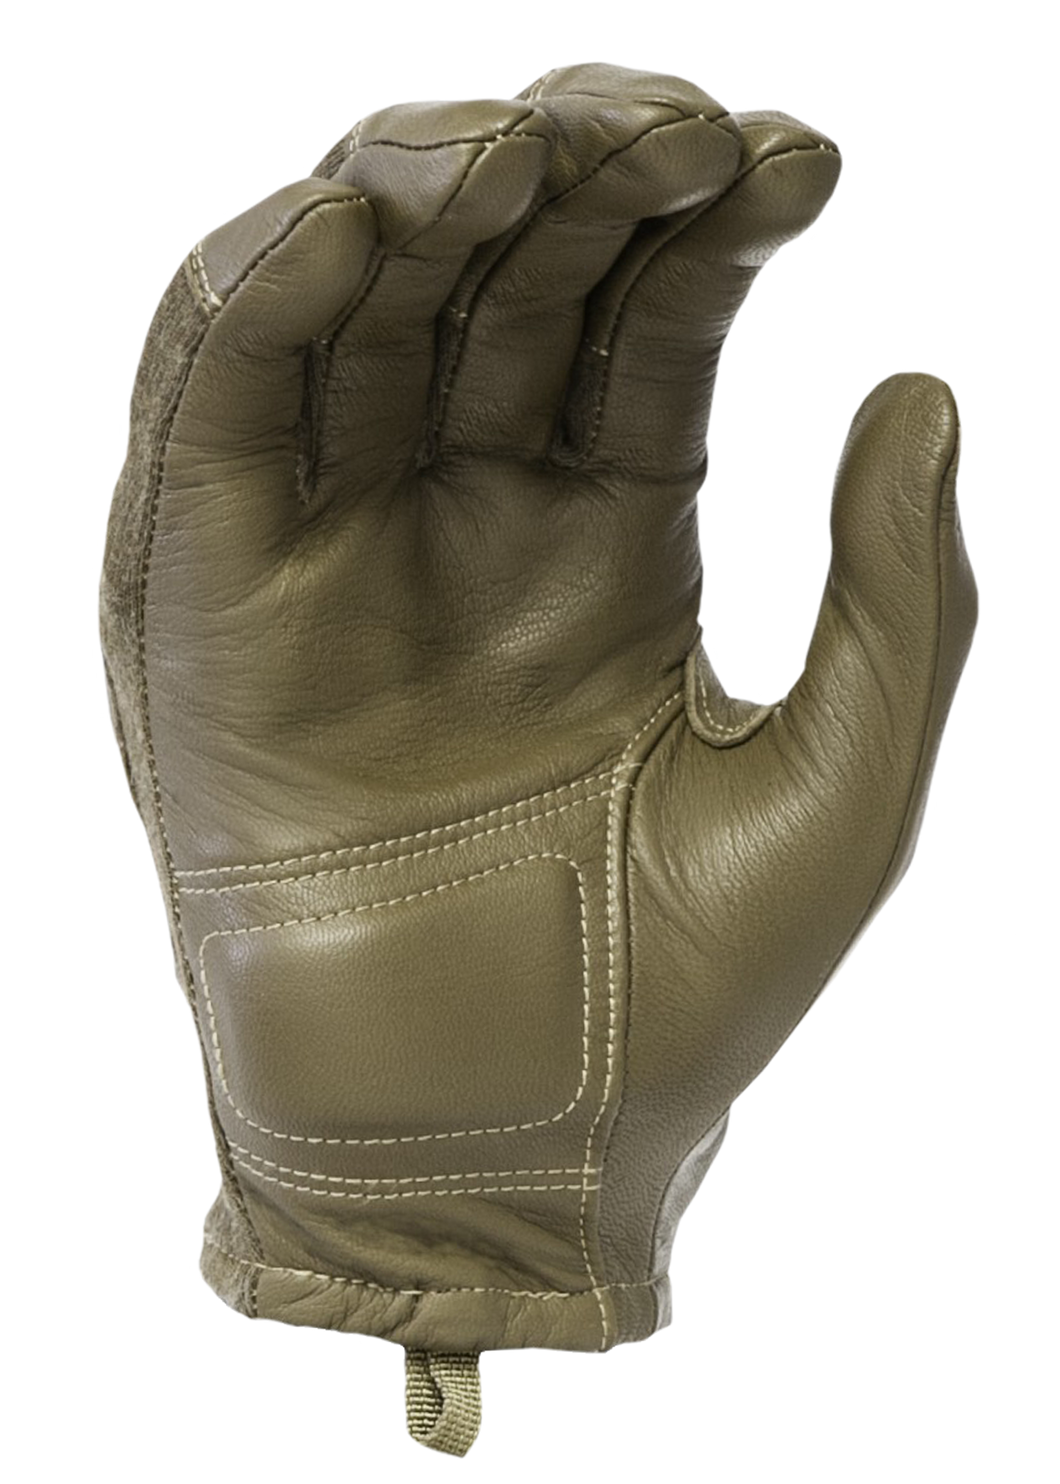 HWI Gear CG100/CG300 Combat Utility Fire Resistant Gloves